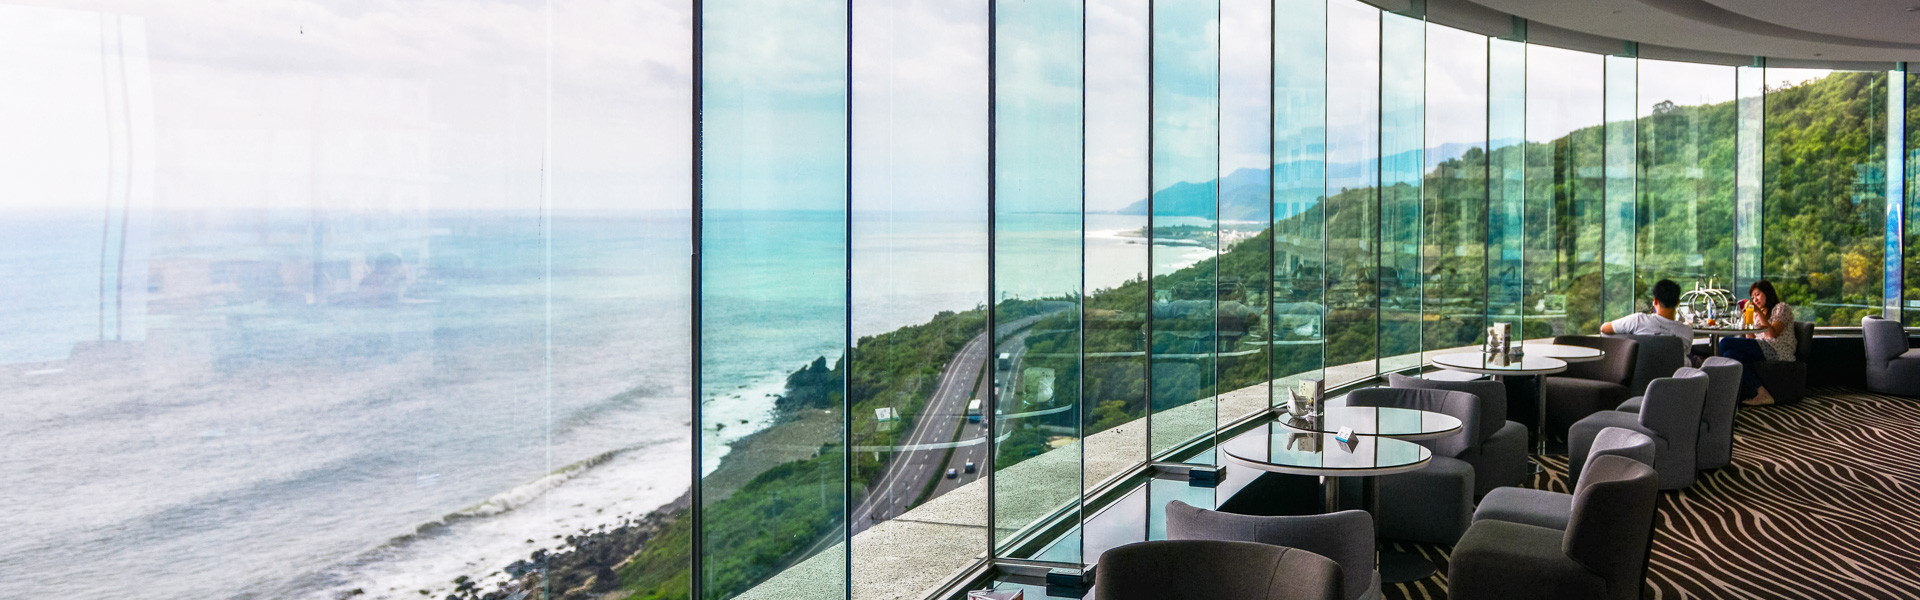 H會館 U.F.O Lounge ~ 360度海景景觀咖啡廳